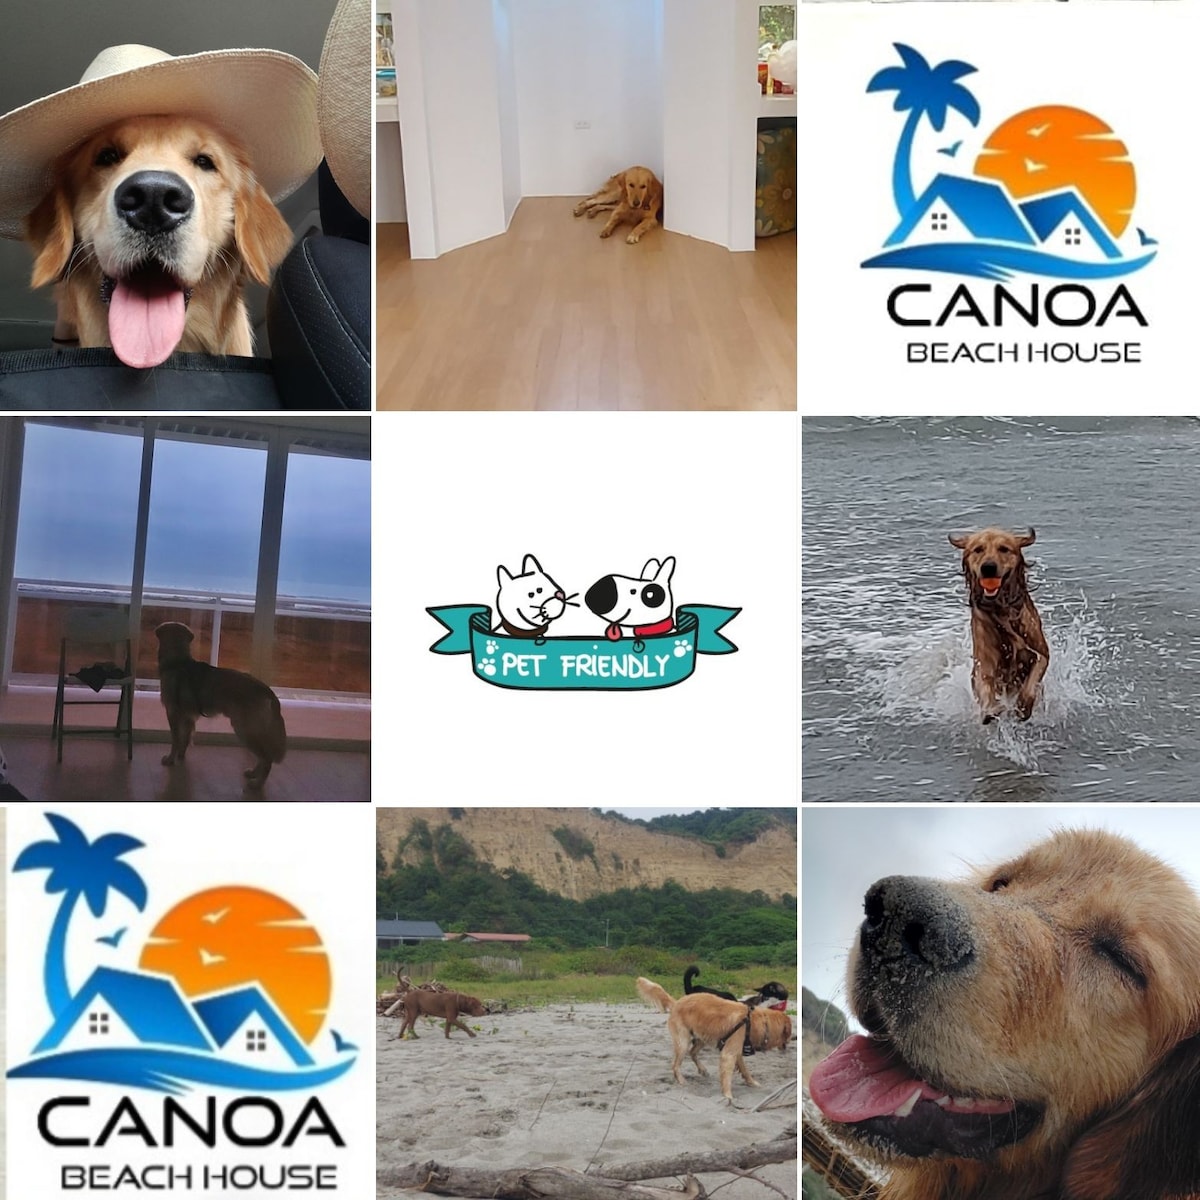 🏖🏡Casa de Playa en Canoa- Manabí

太平洋娱乐区（ Pacific Recreation Sector ） ，很高兴您在100%家具齐全的套房提供舒适愉快的出租服务，并提供所有便利设施。
 
🎯与SDGs一致